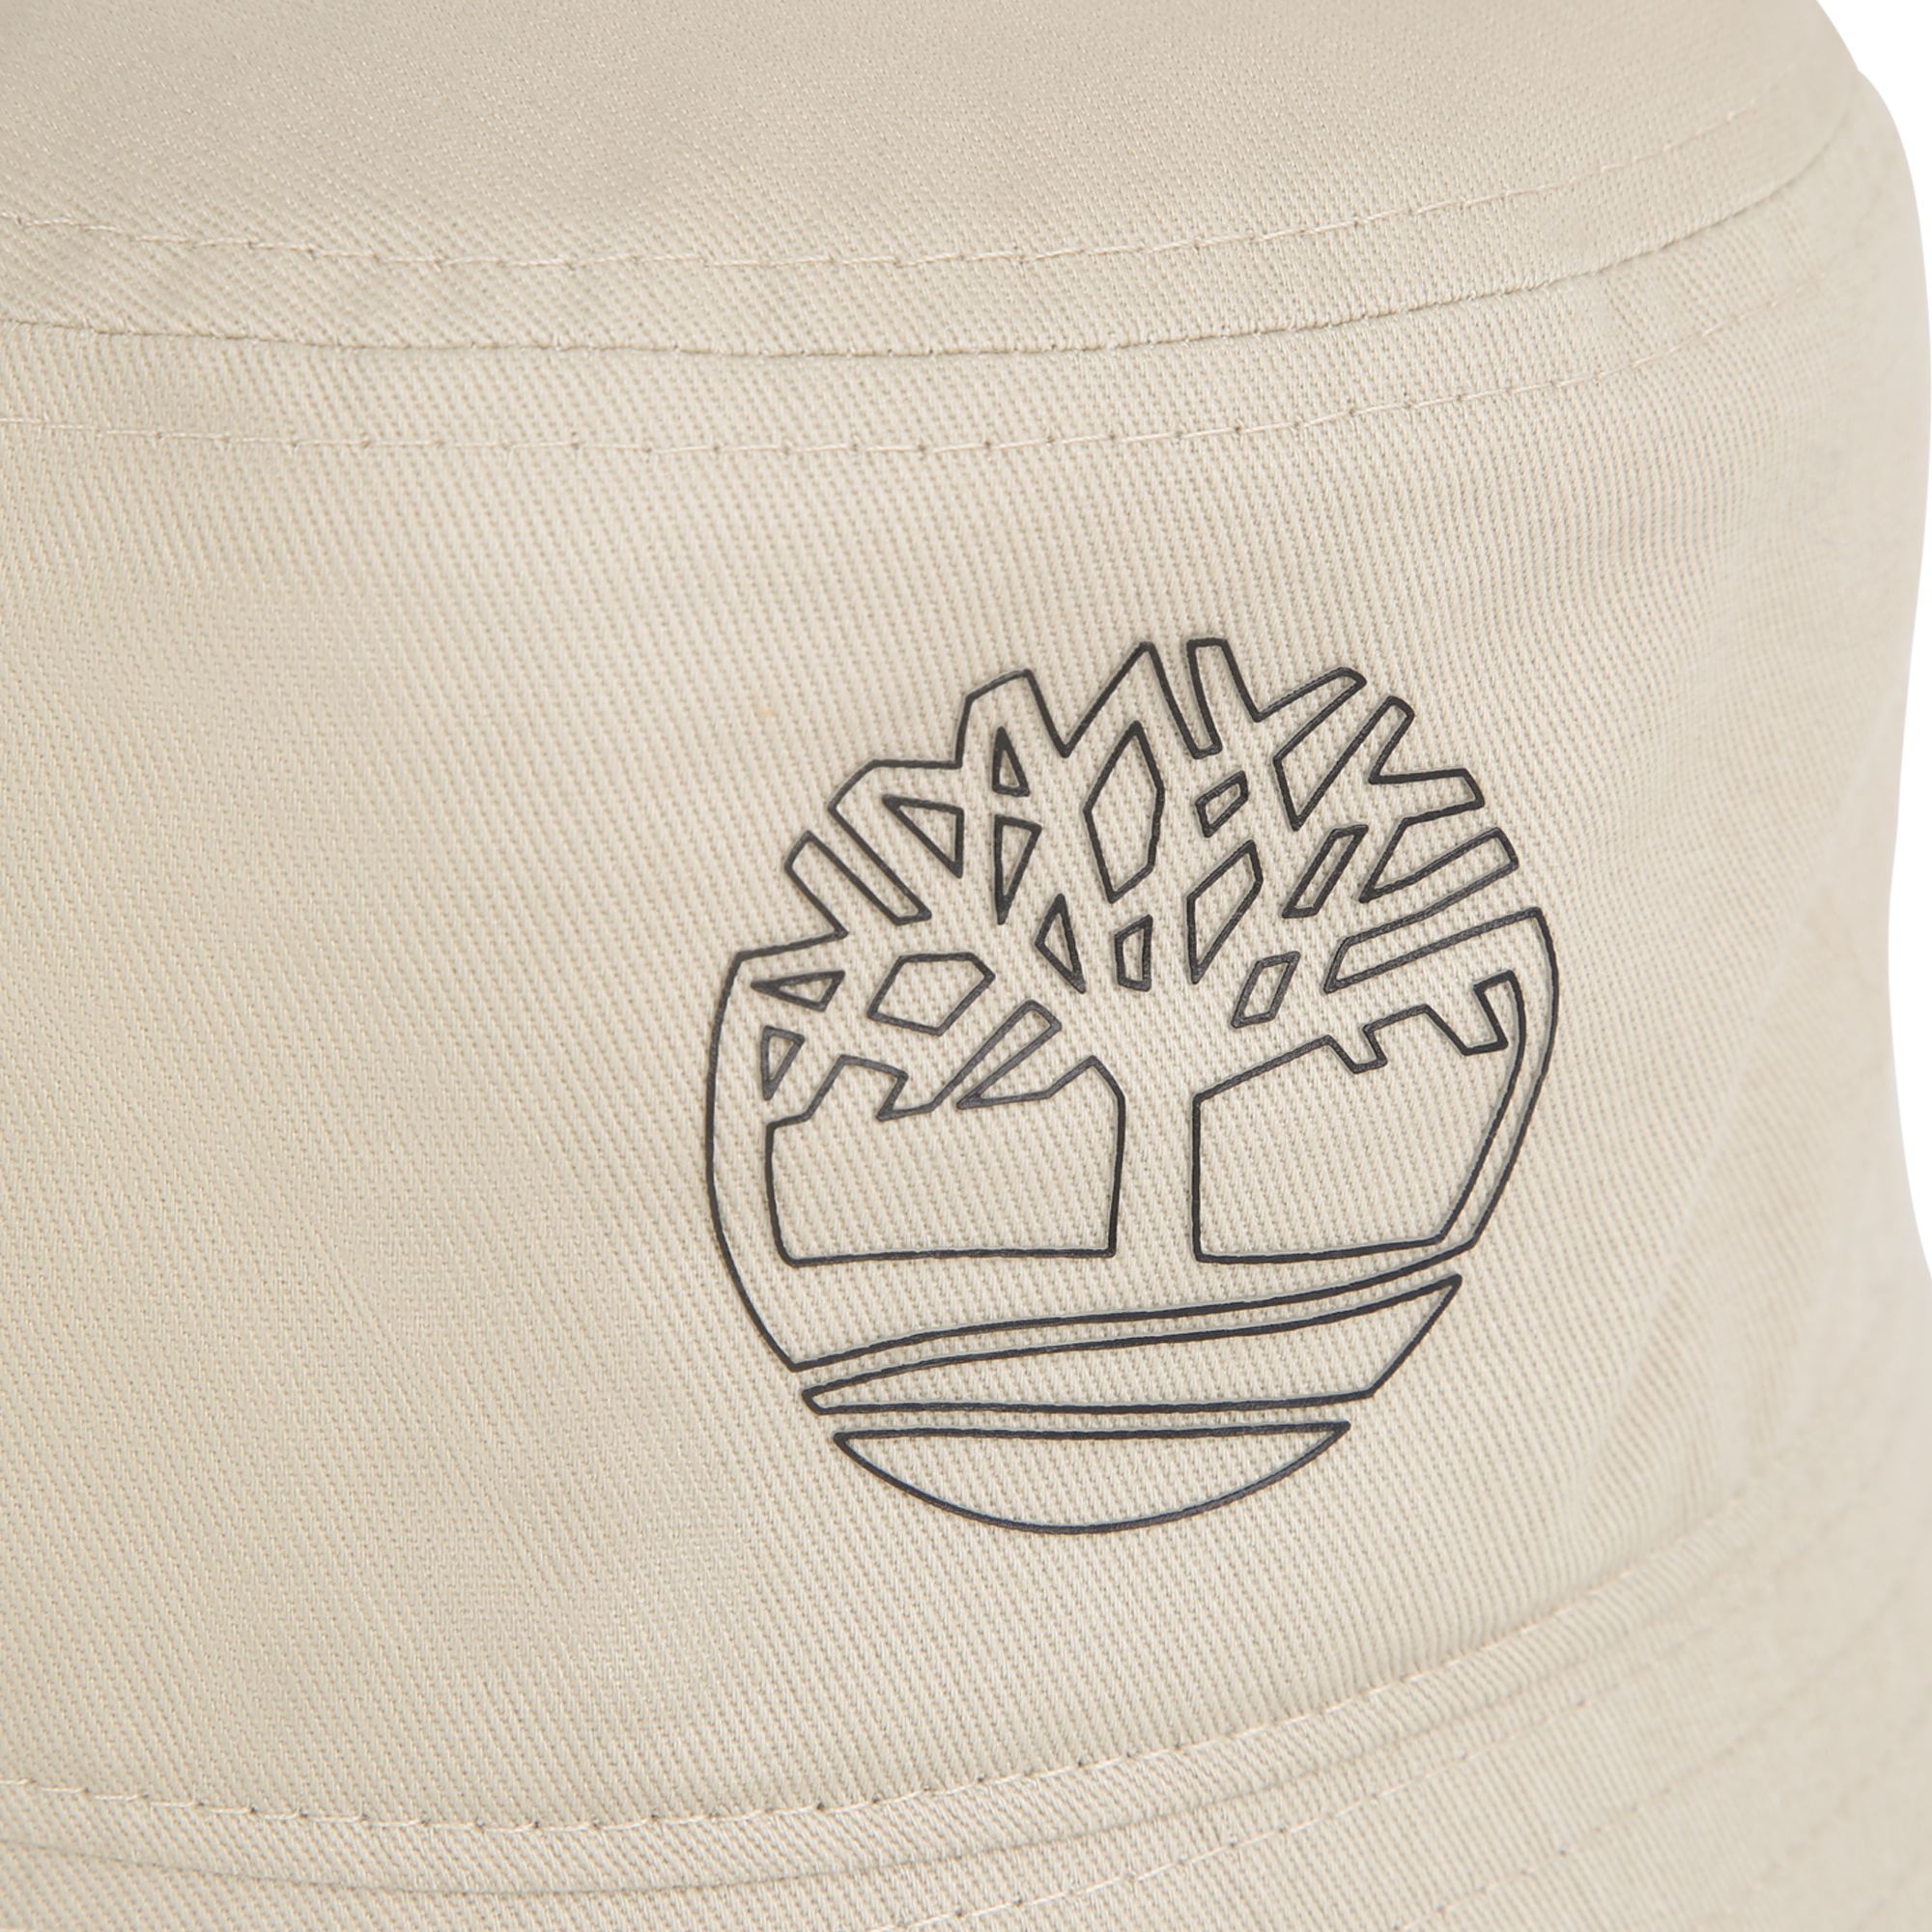 Cotton logo bucket hat TIMBERLAND for BOY